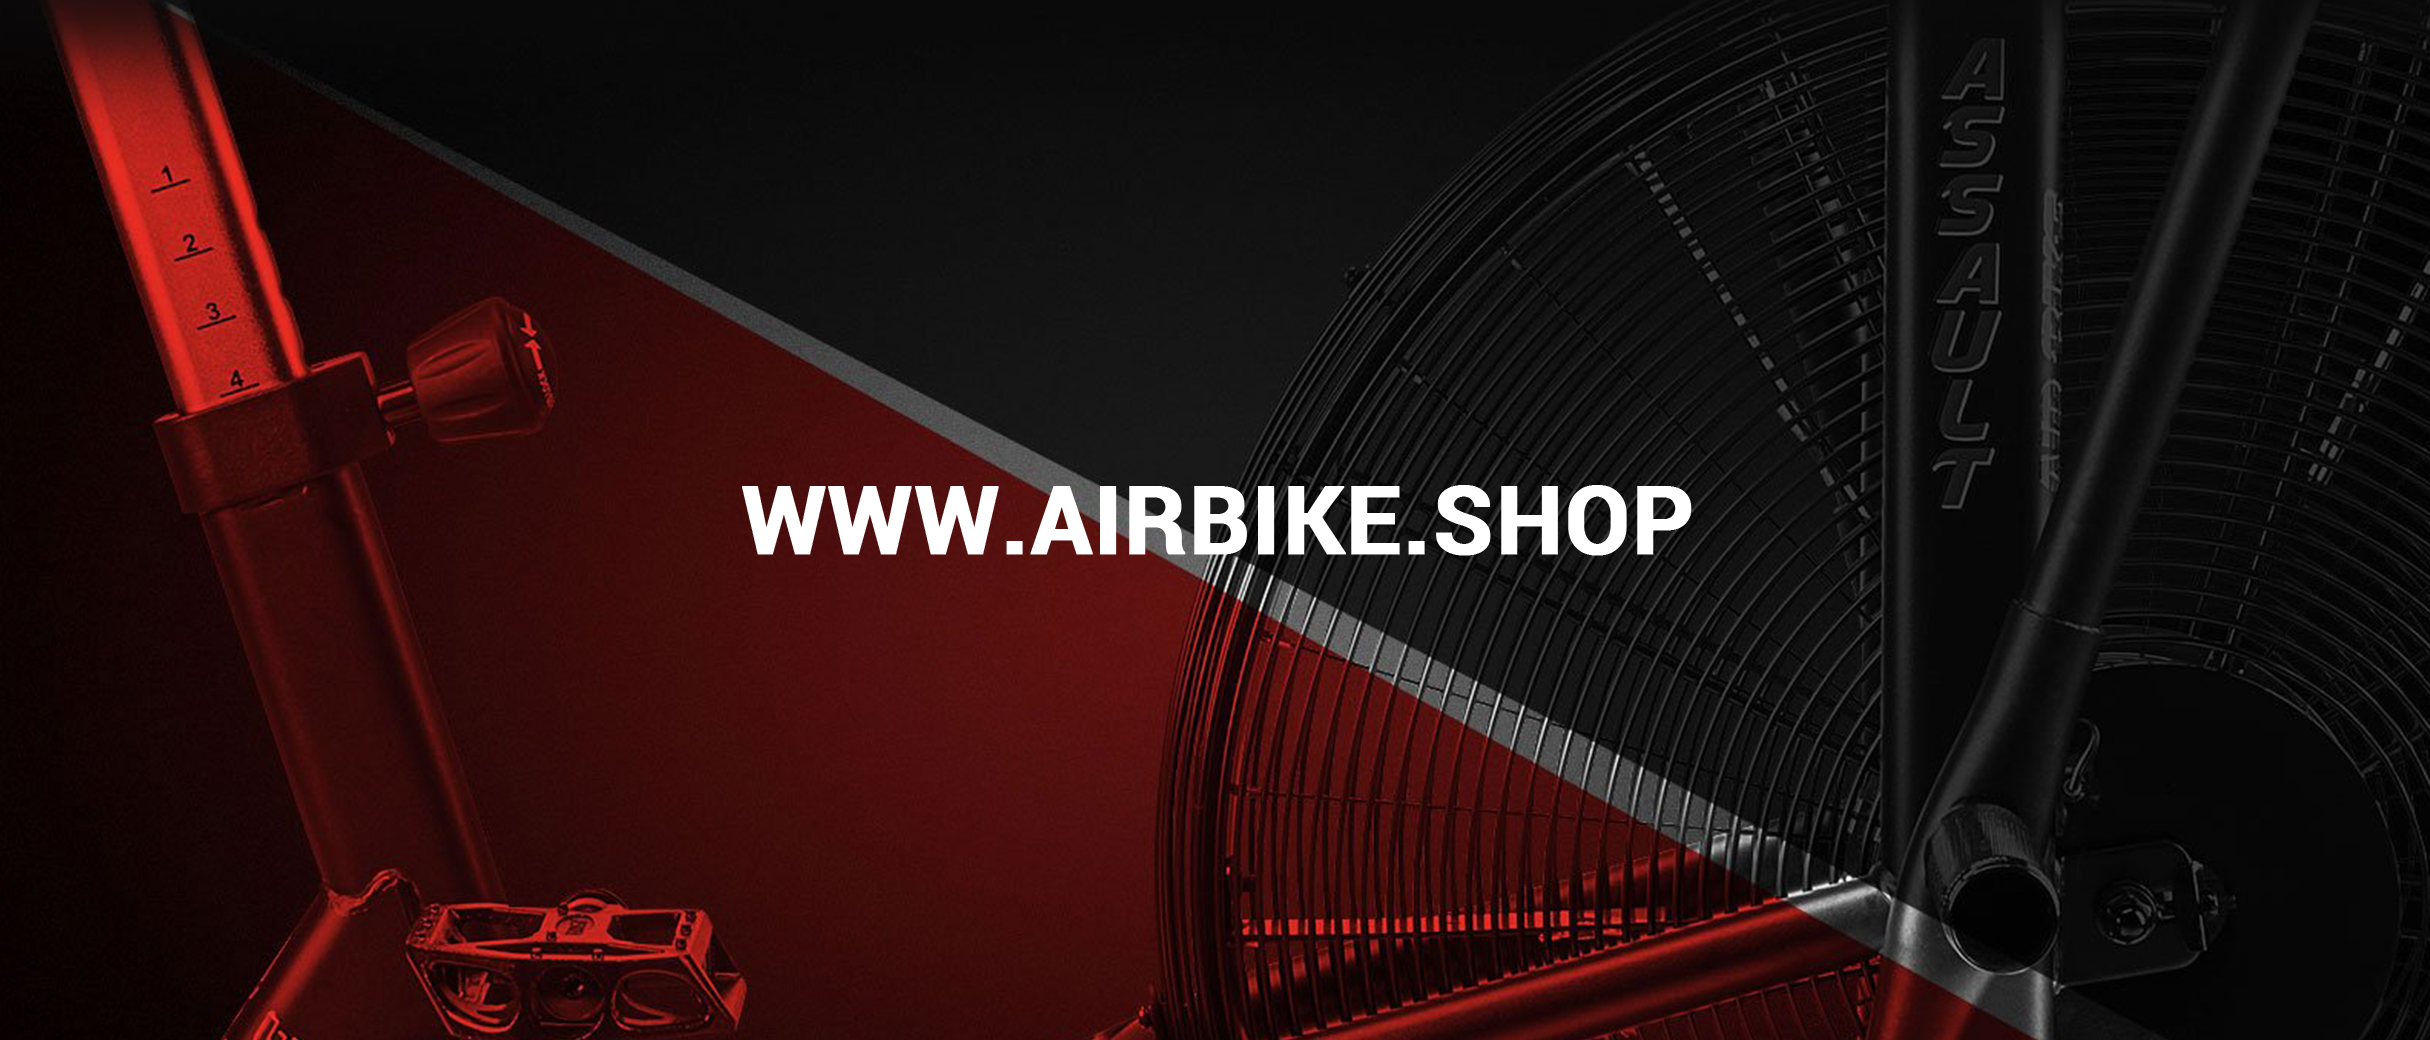 (c) Airbike.shop